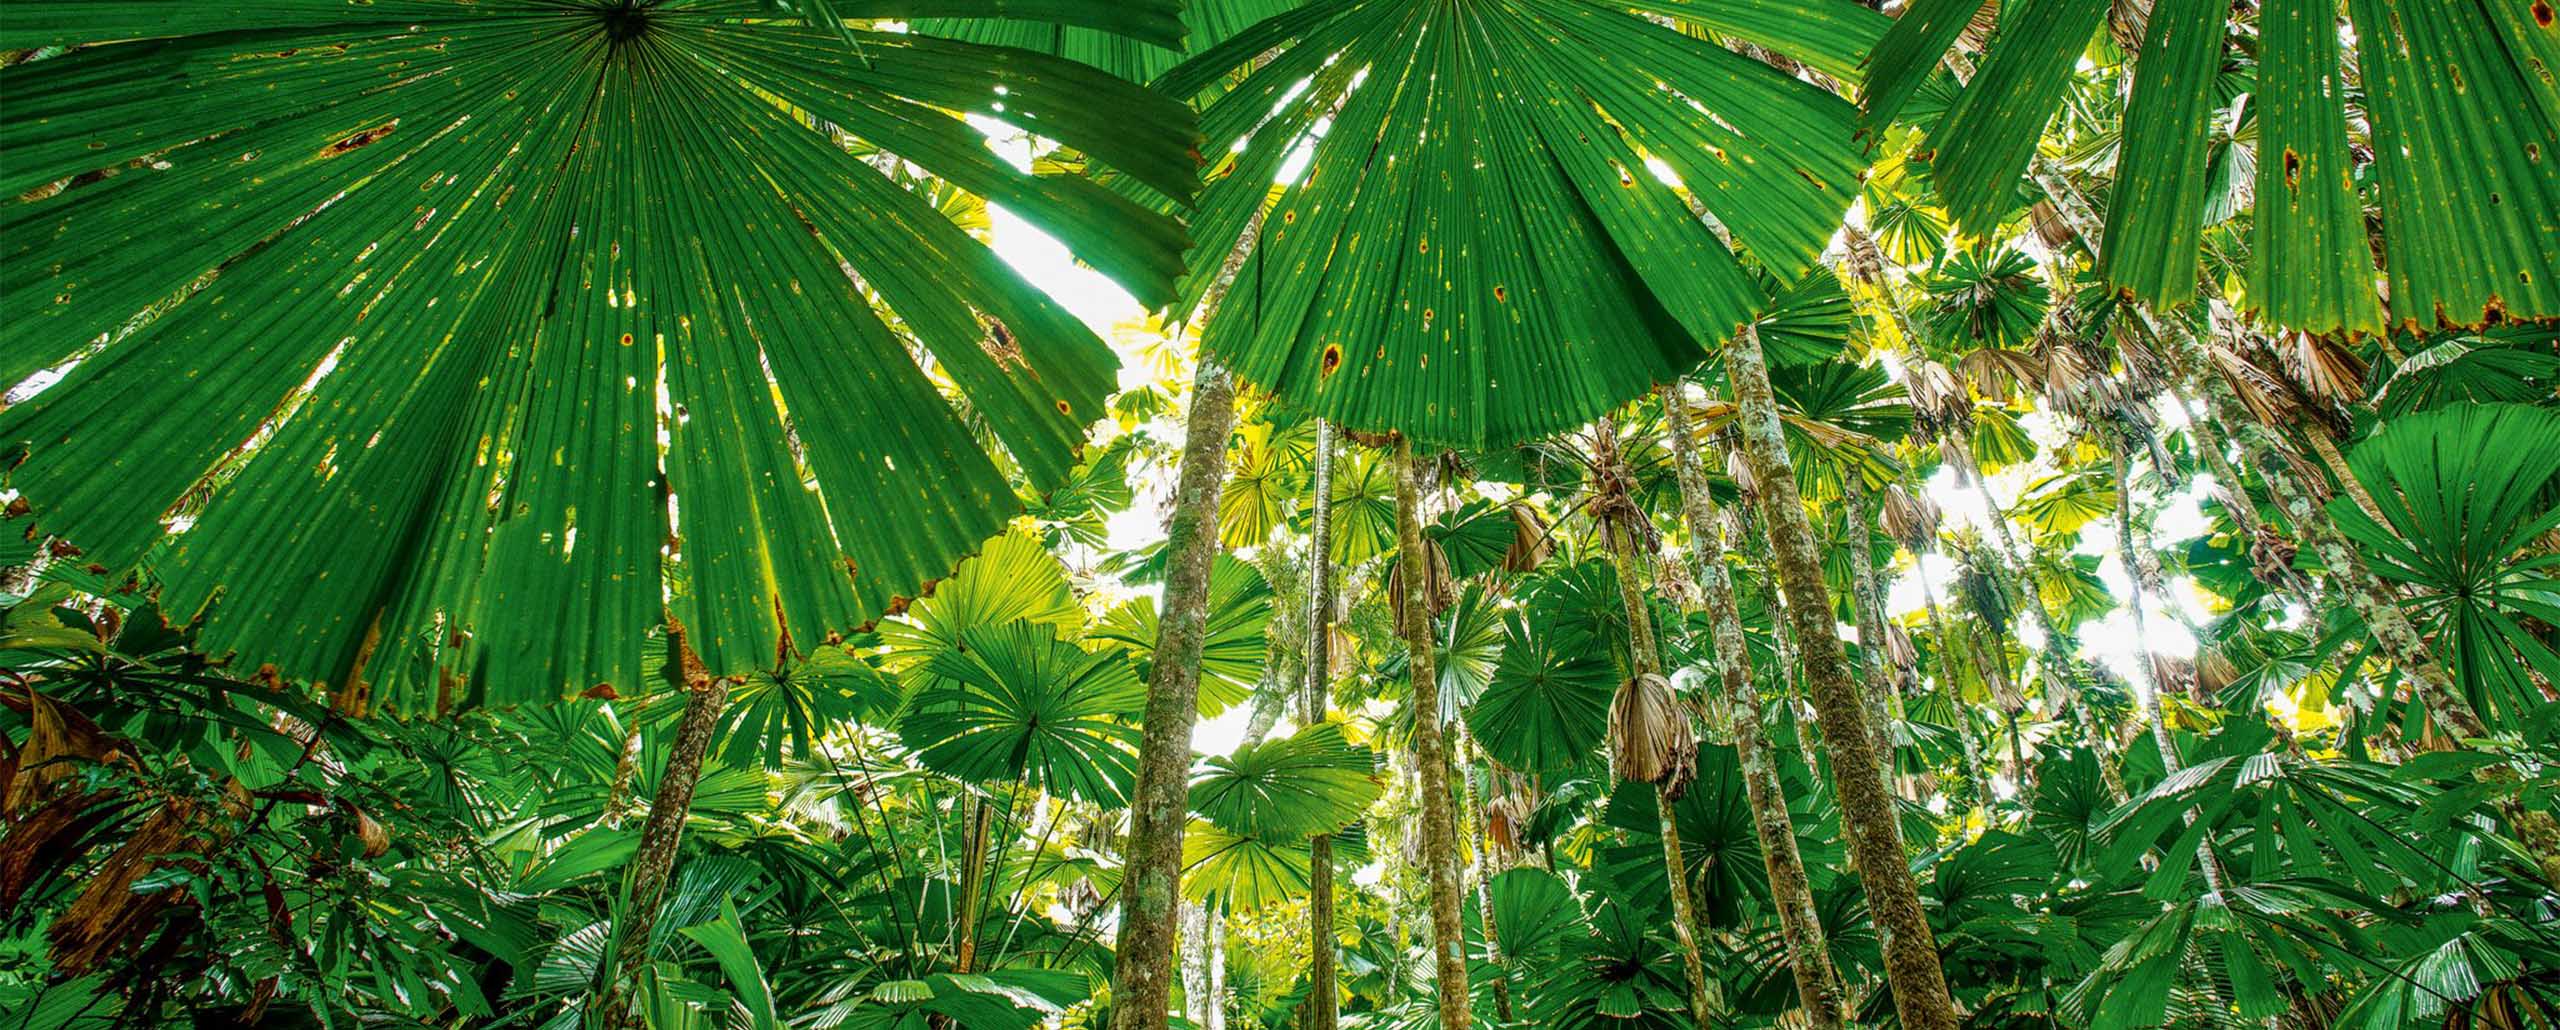 How best to explore Tropical North Queensland, Australia